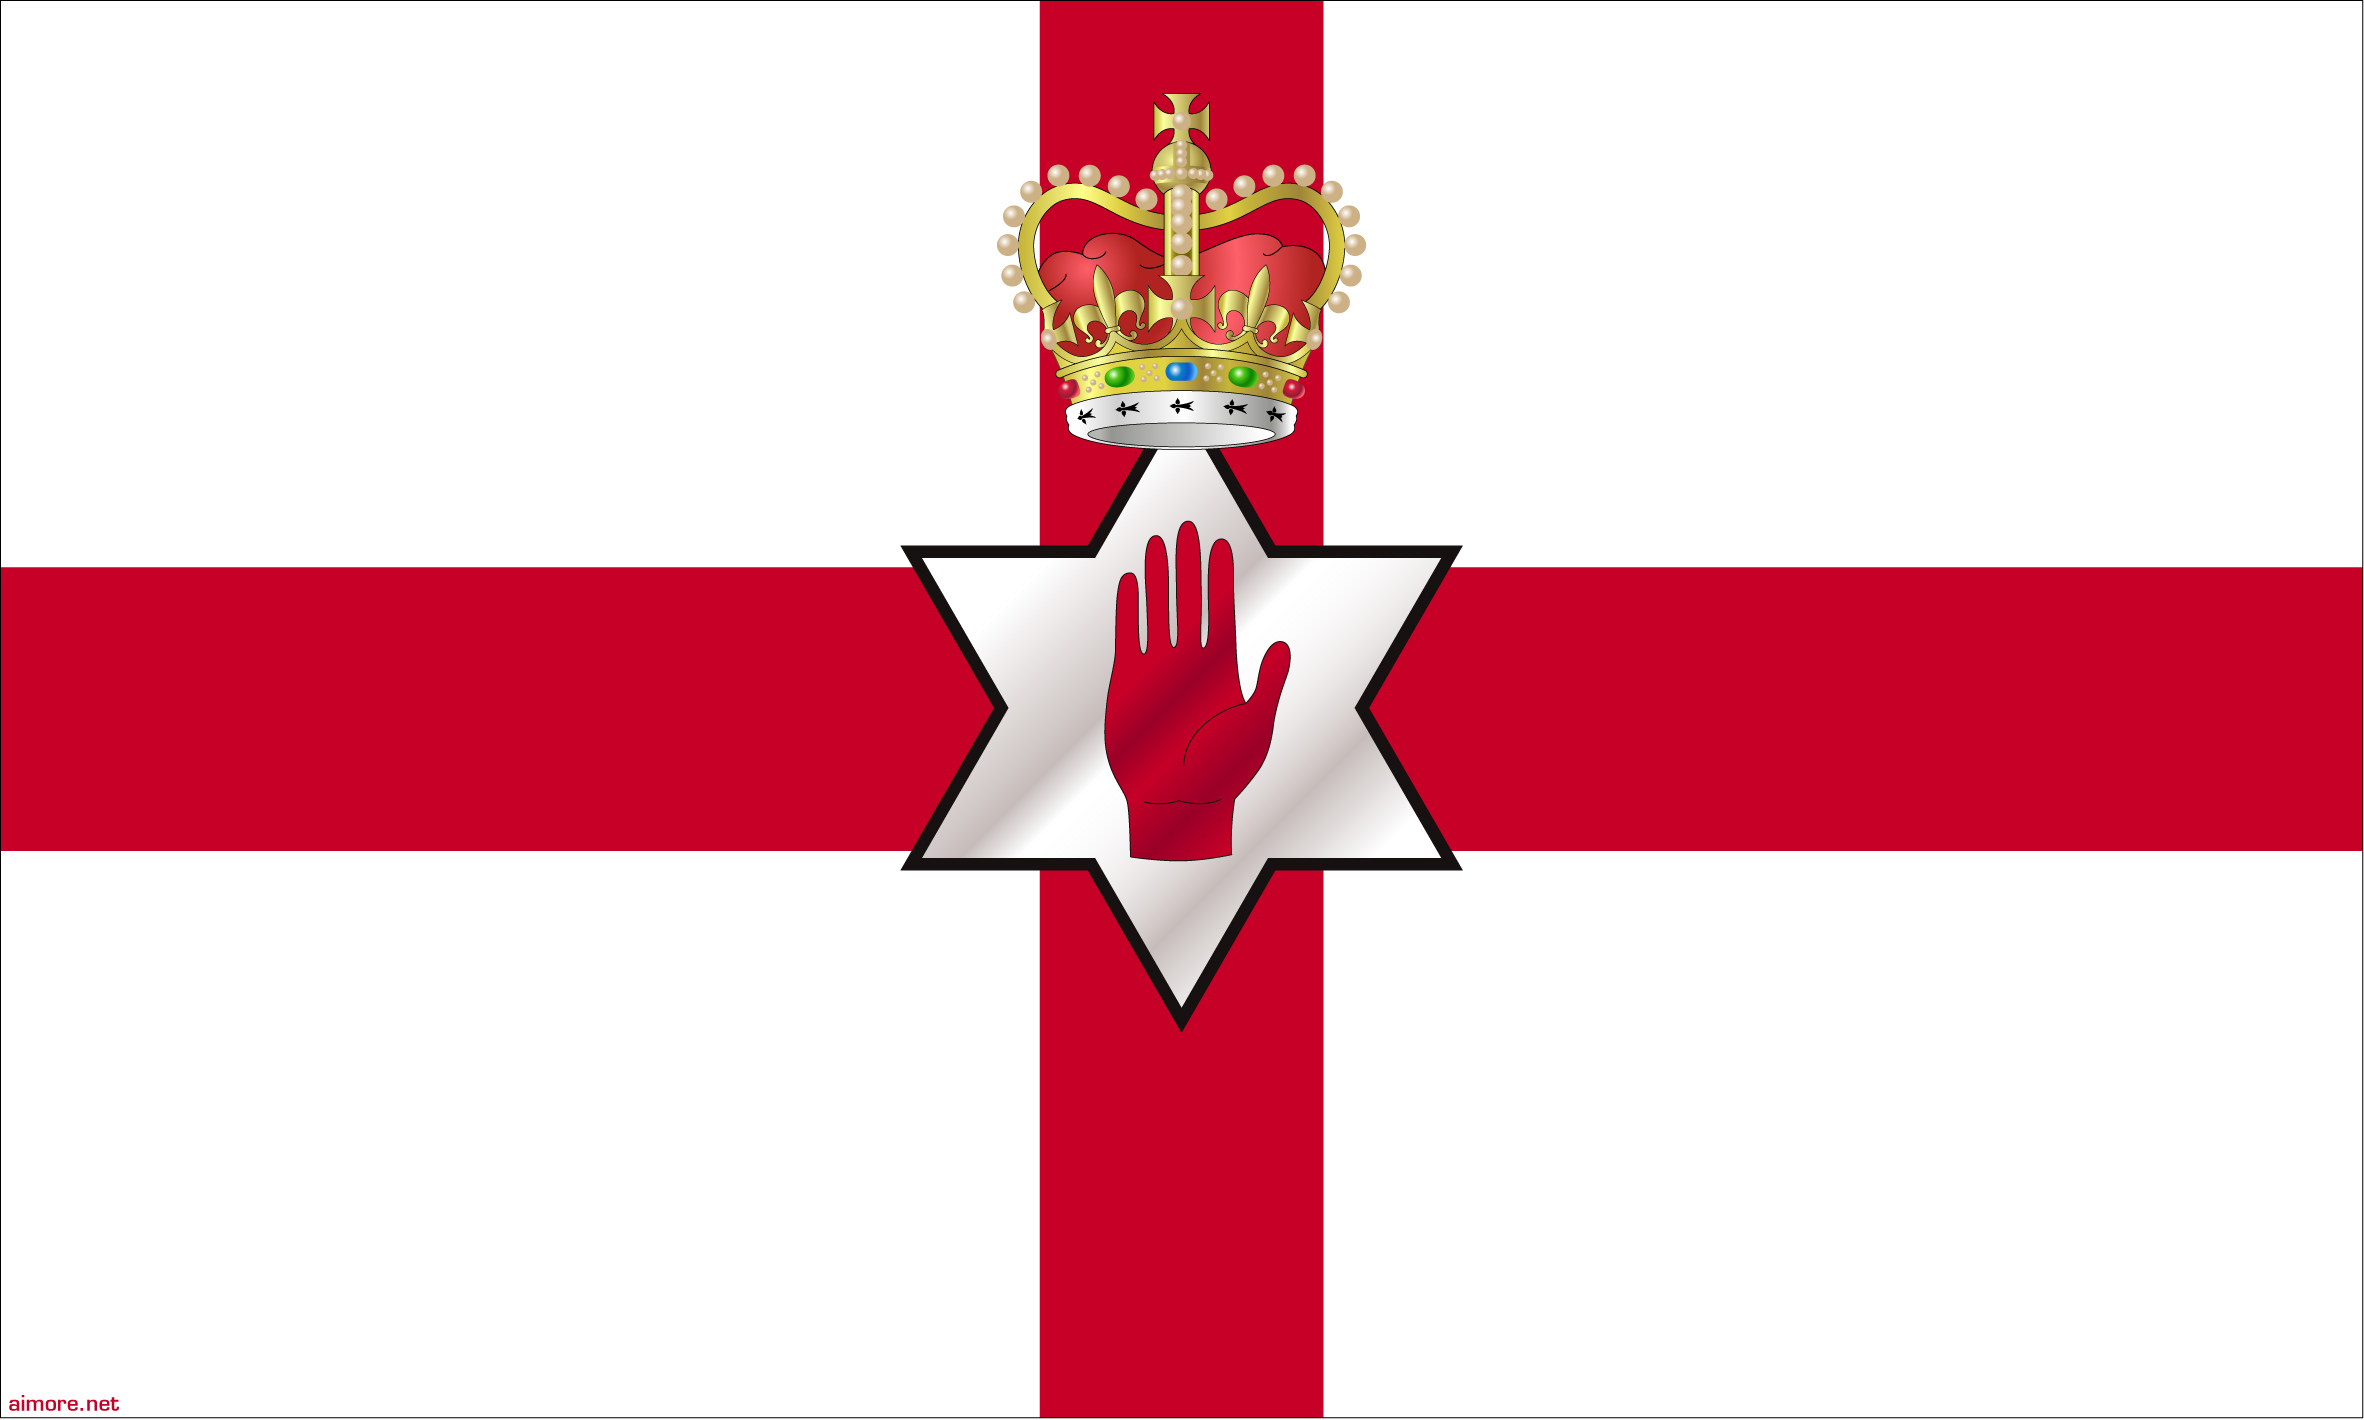 Bandeira Irlanda do Norte